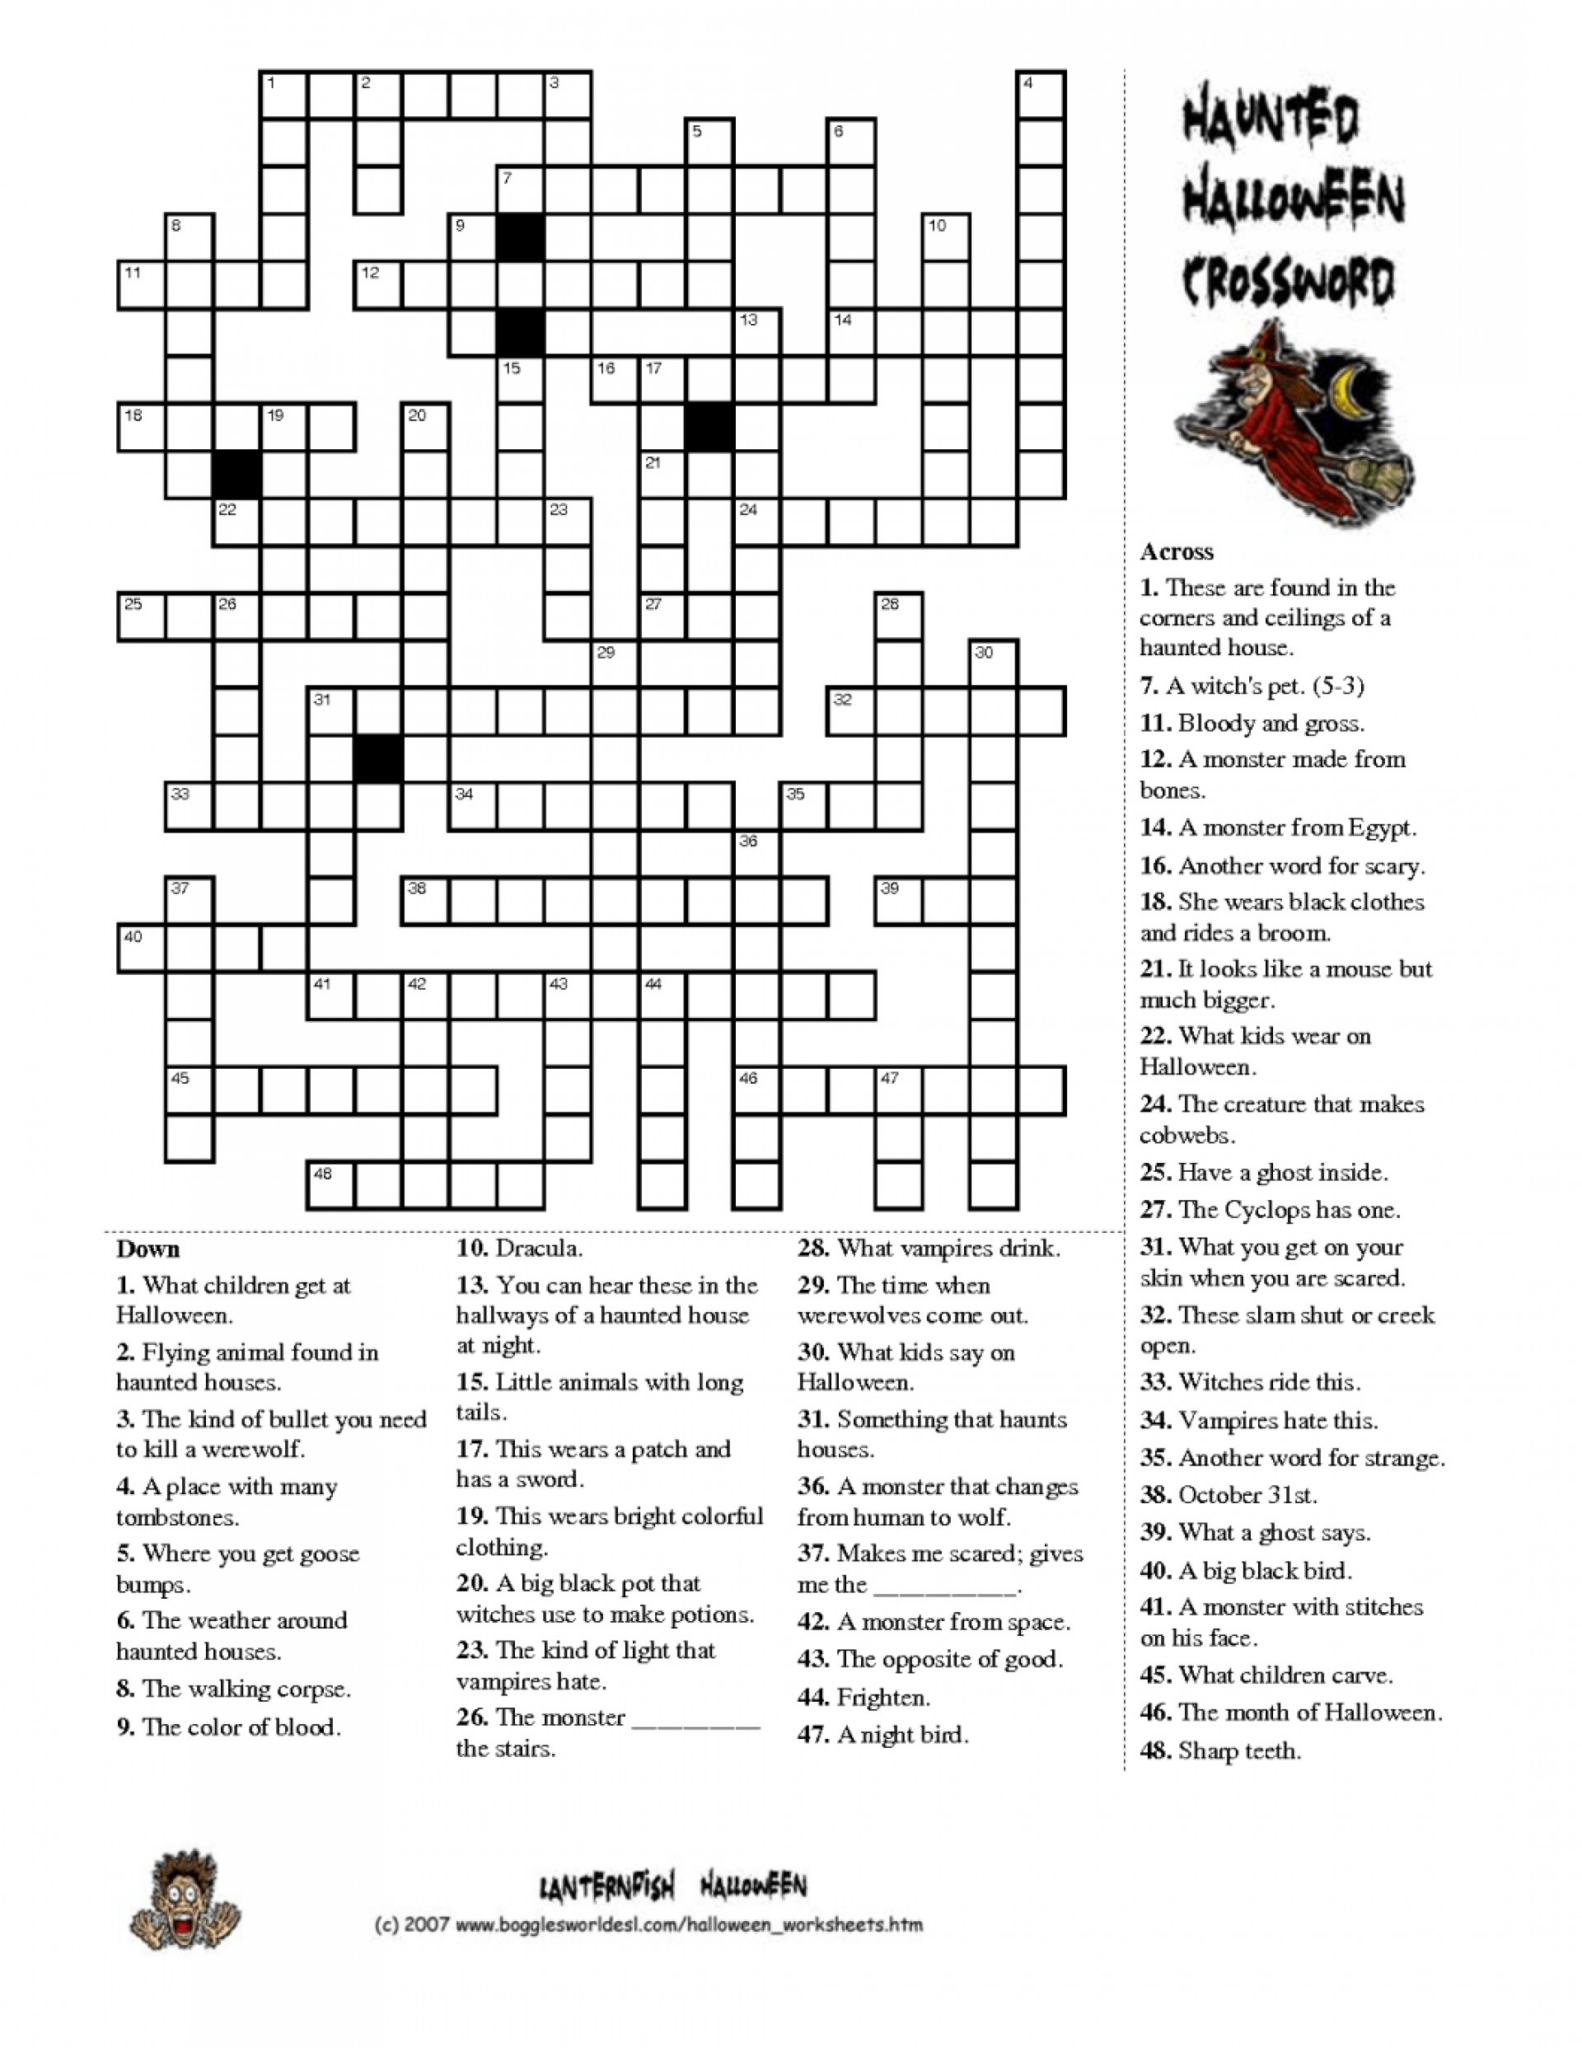 halloween-crossword-puzzles-for-adults-printable-printable-crossword